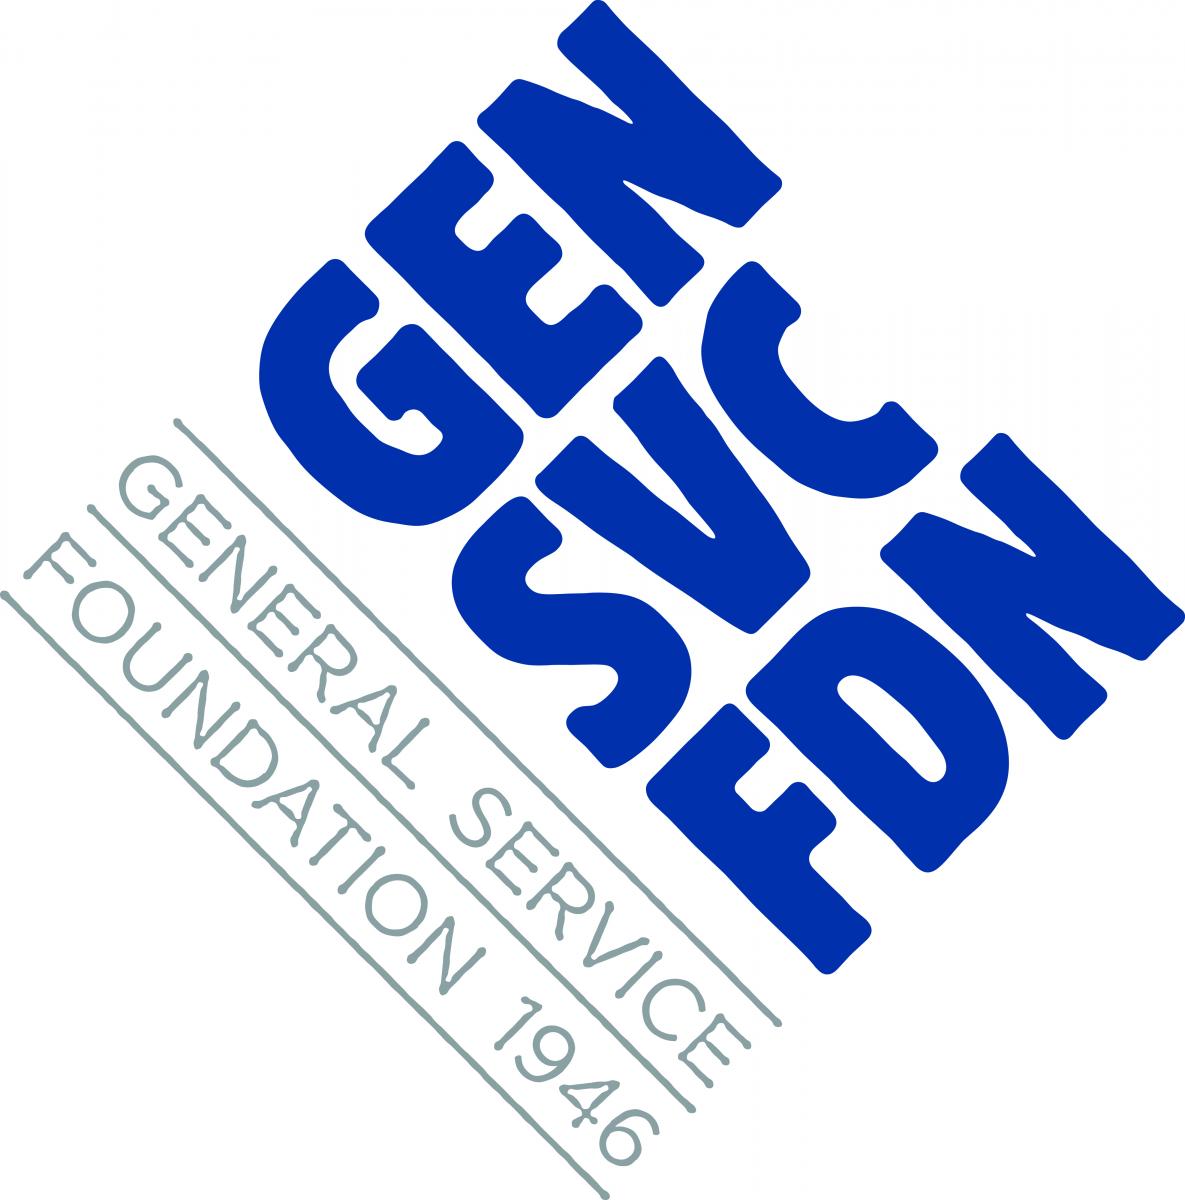 General Service Foundation